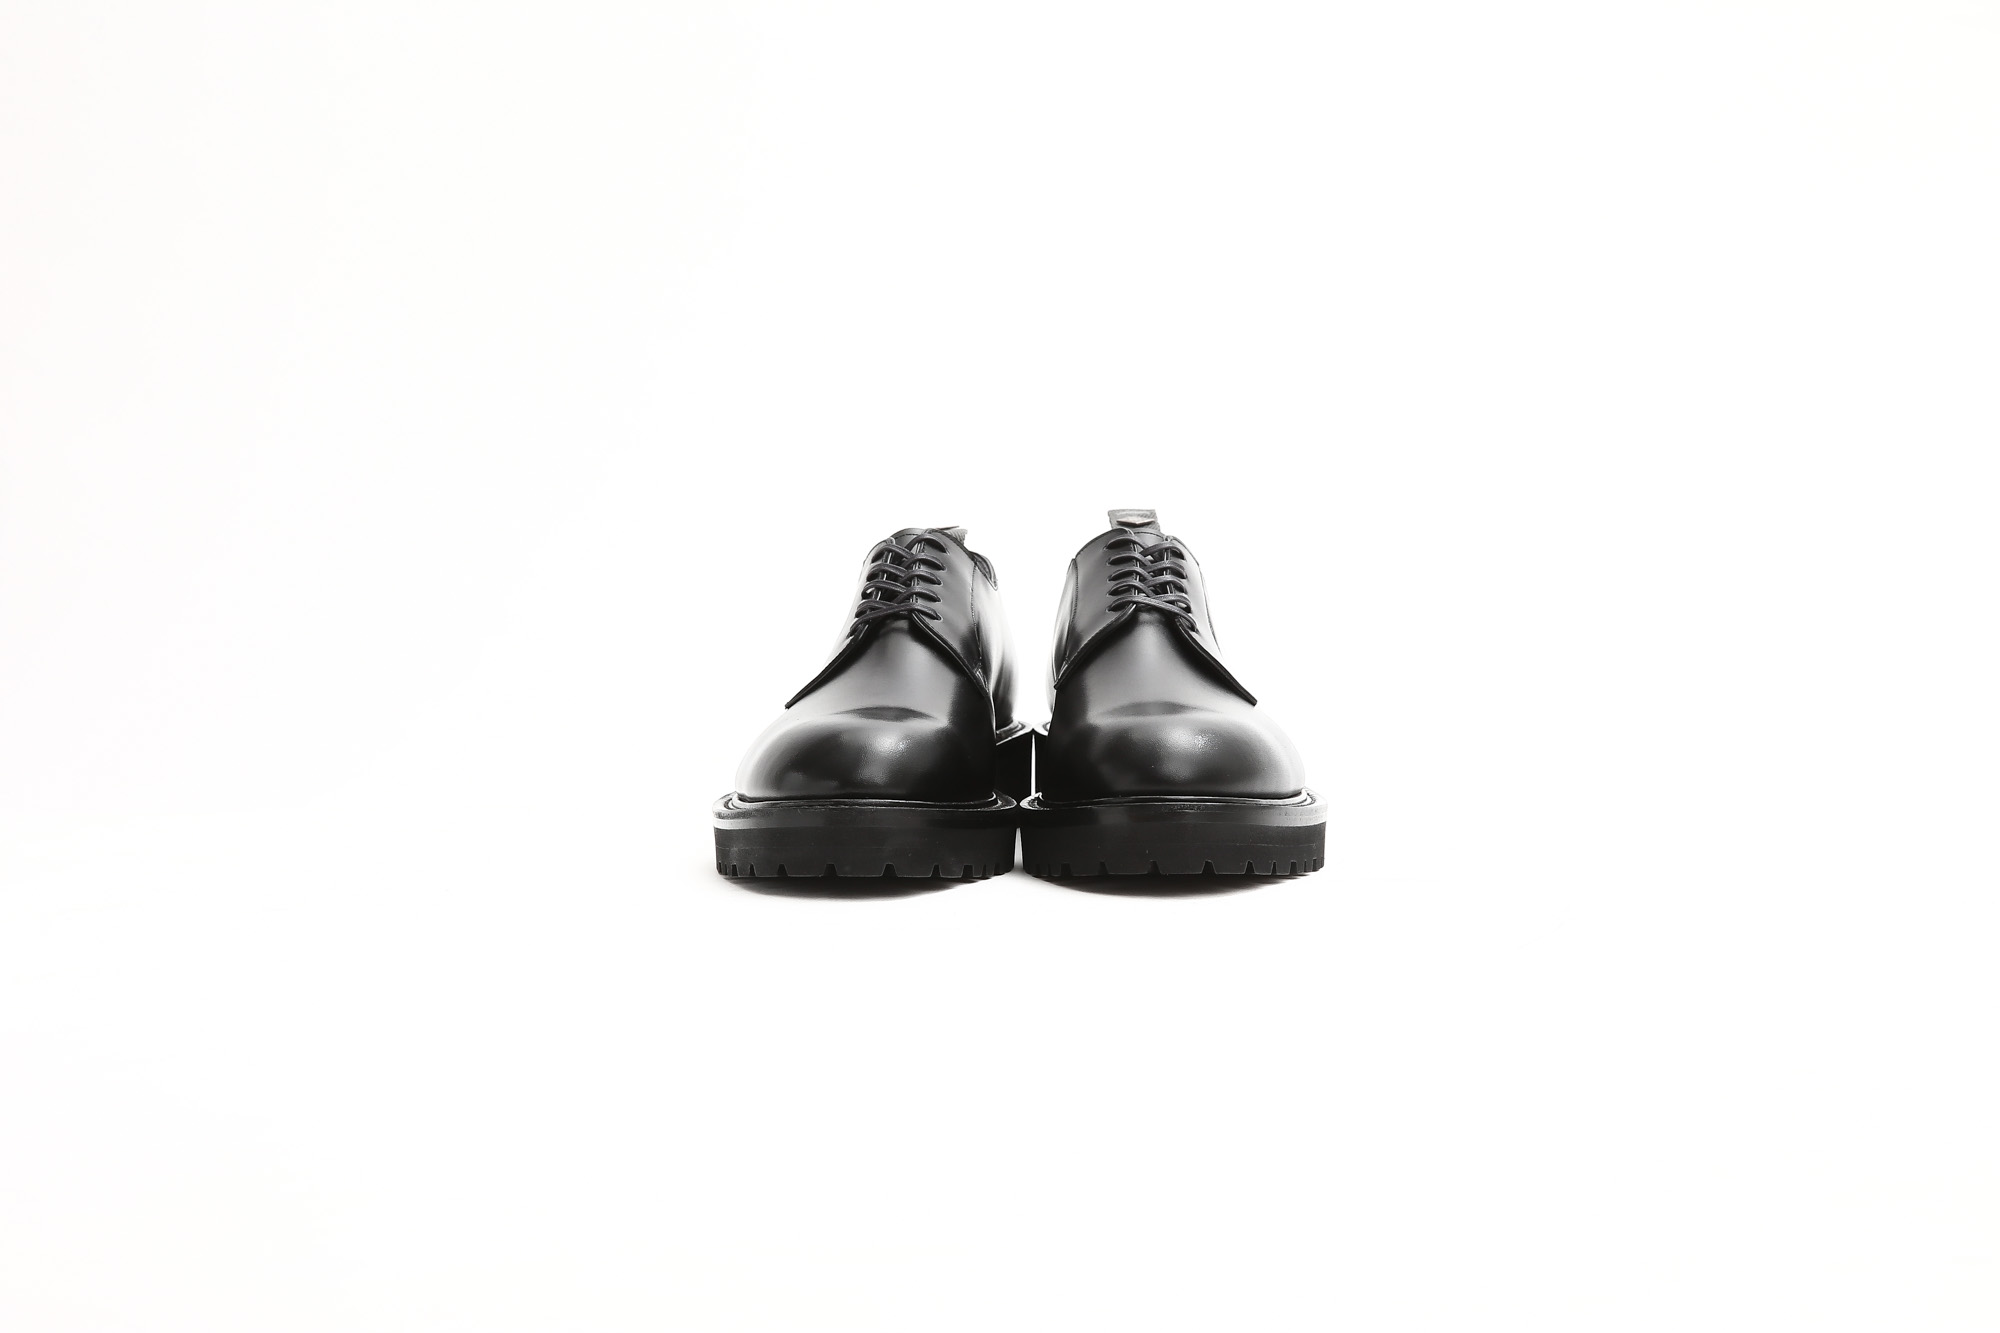 WH (ダブルエイチ) WHS-0010 Plane Toe Shoes (干場氏 スペシャル) Birdie Last (バーディラスト) ANNONAY Vocalou Calf Leather プレーントゥシューズ BLACK (ブラック) MADE IN JAPAN (日本製) 2019 春夏　【ご予約受付中】 愛知 名古屋 alto e diritto altoediritto アルトエデリット